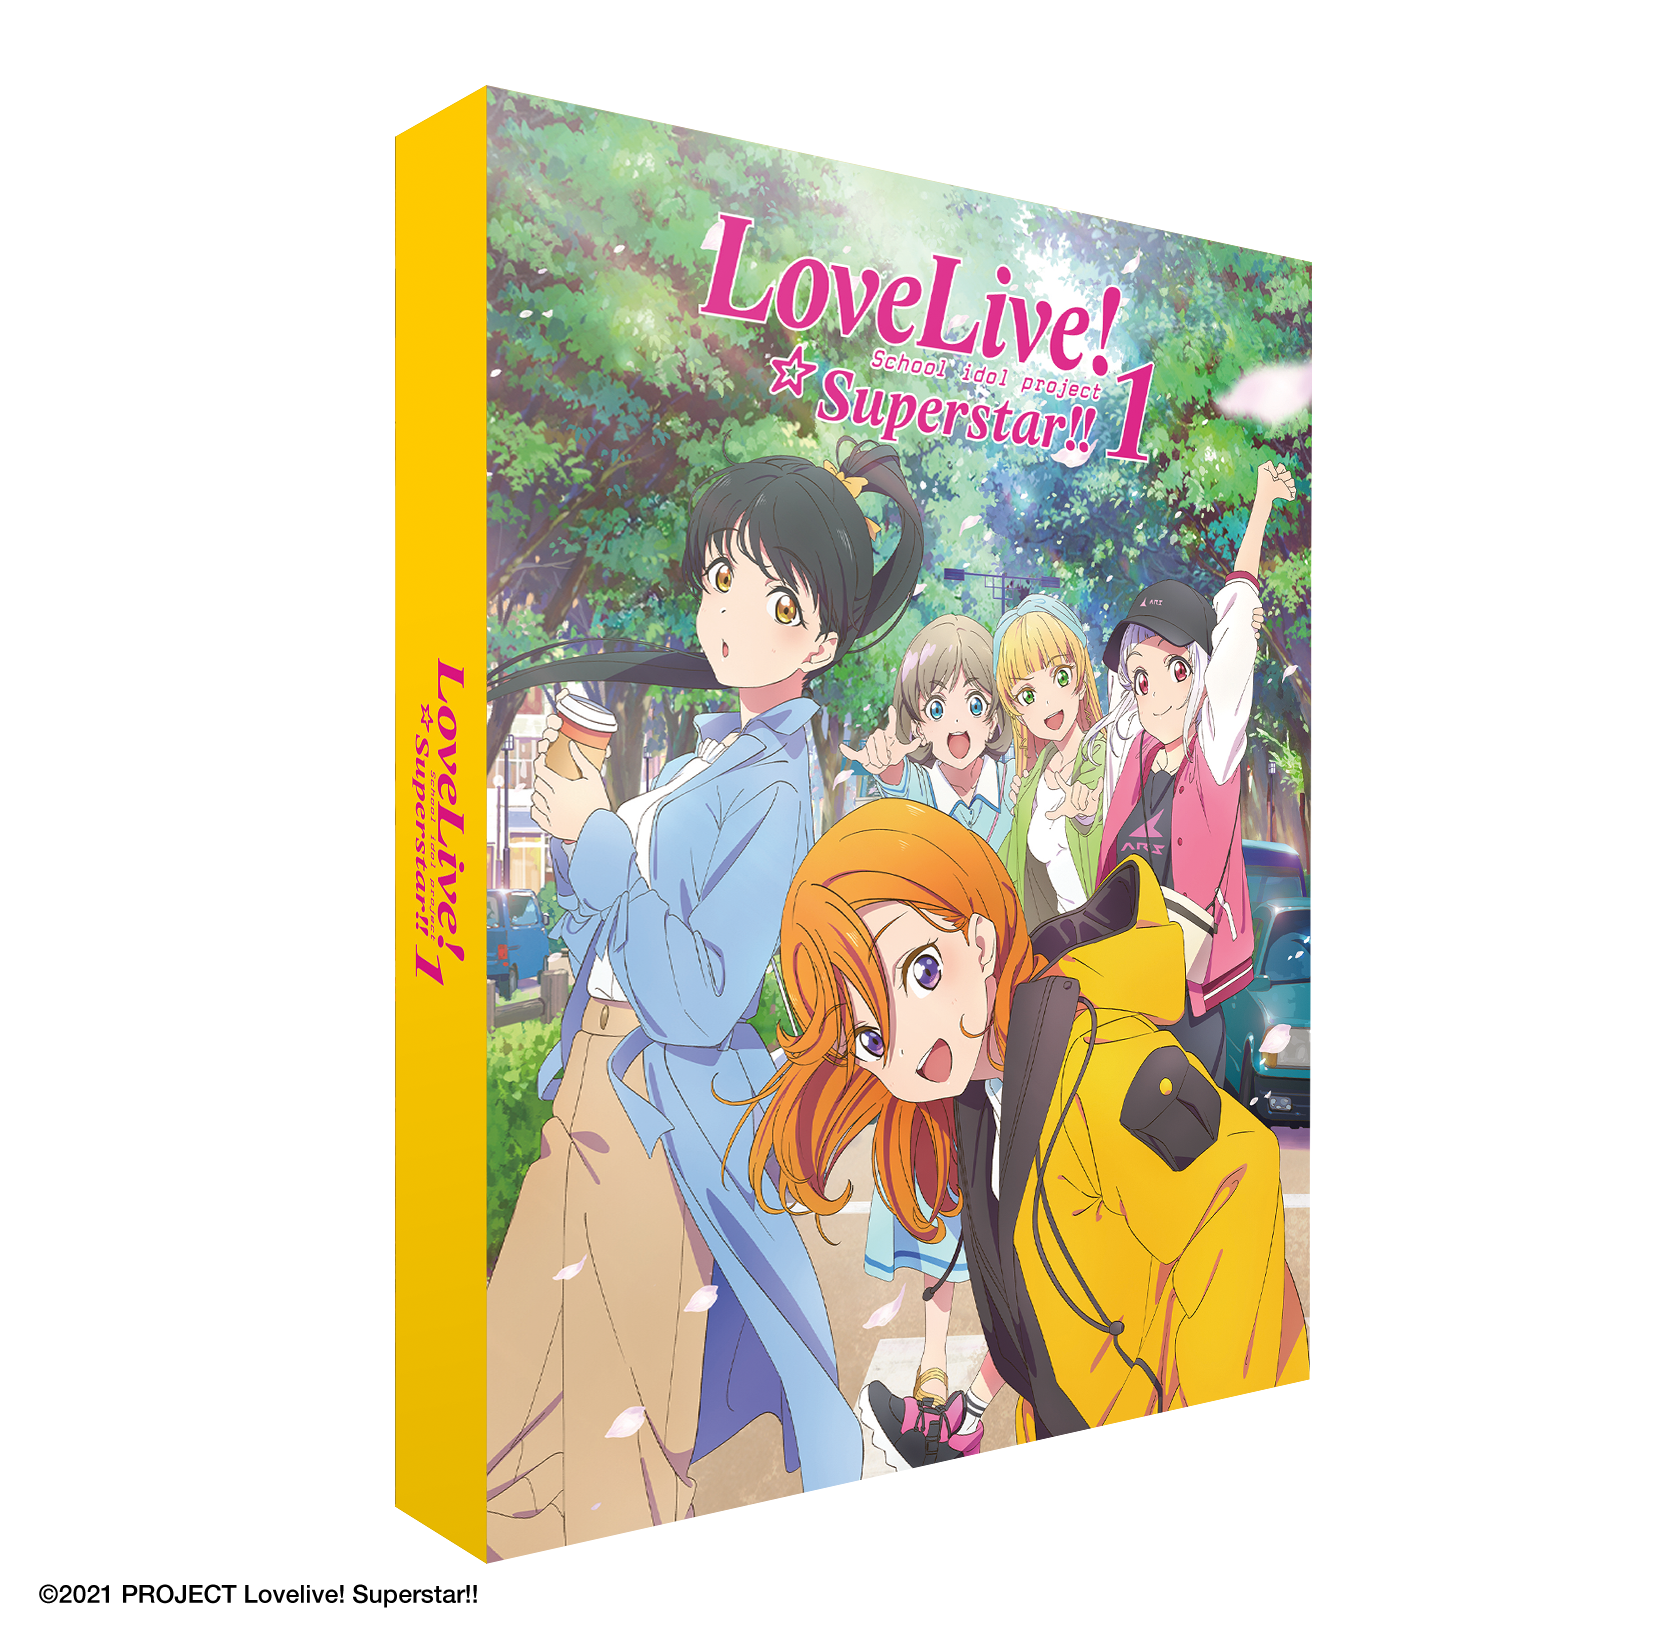 Love Live! School Idol Project OVA streaming